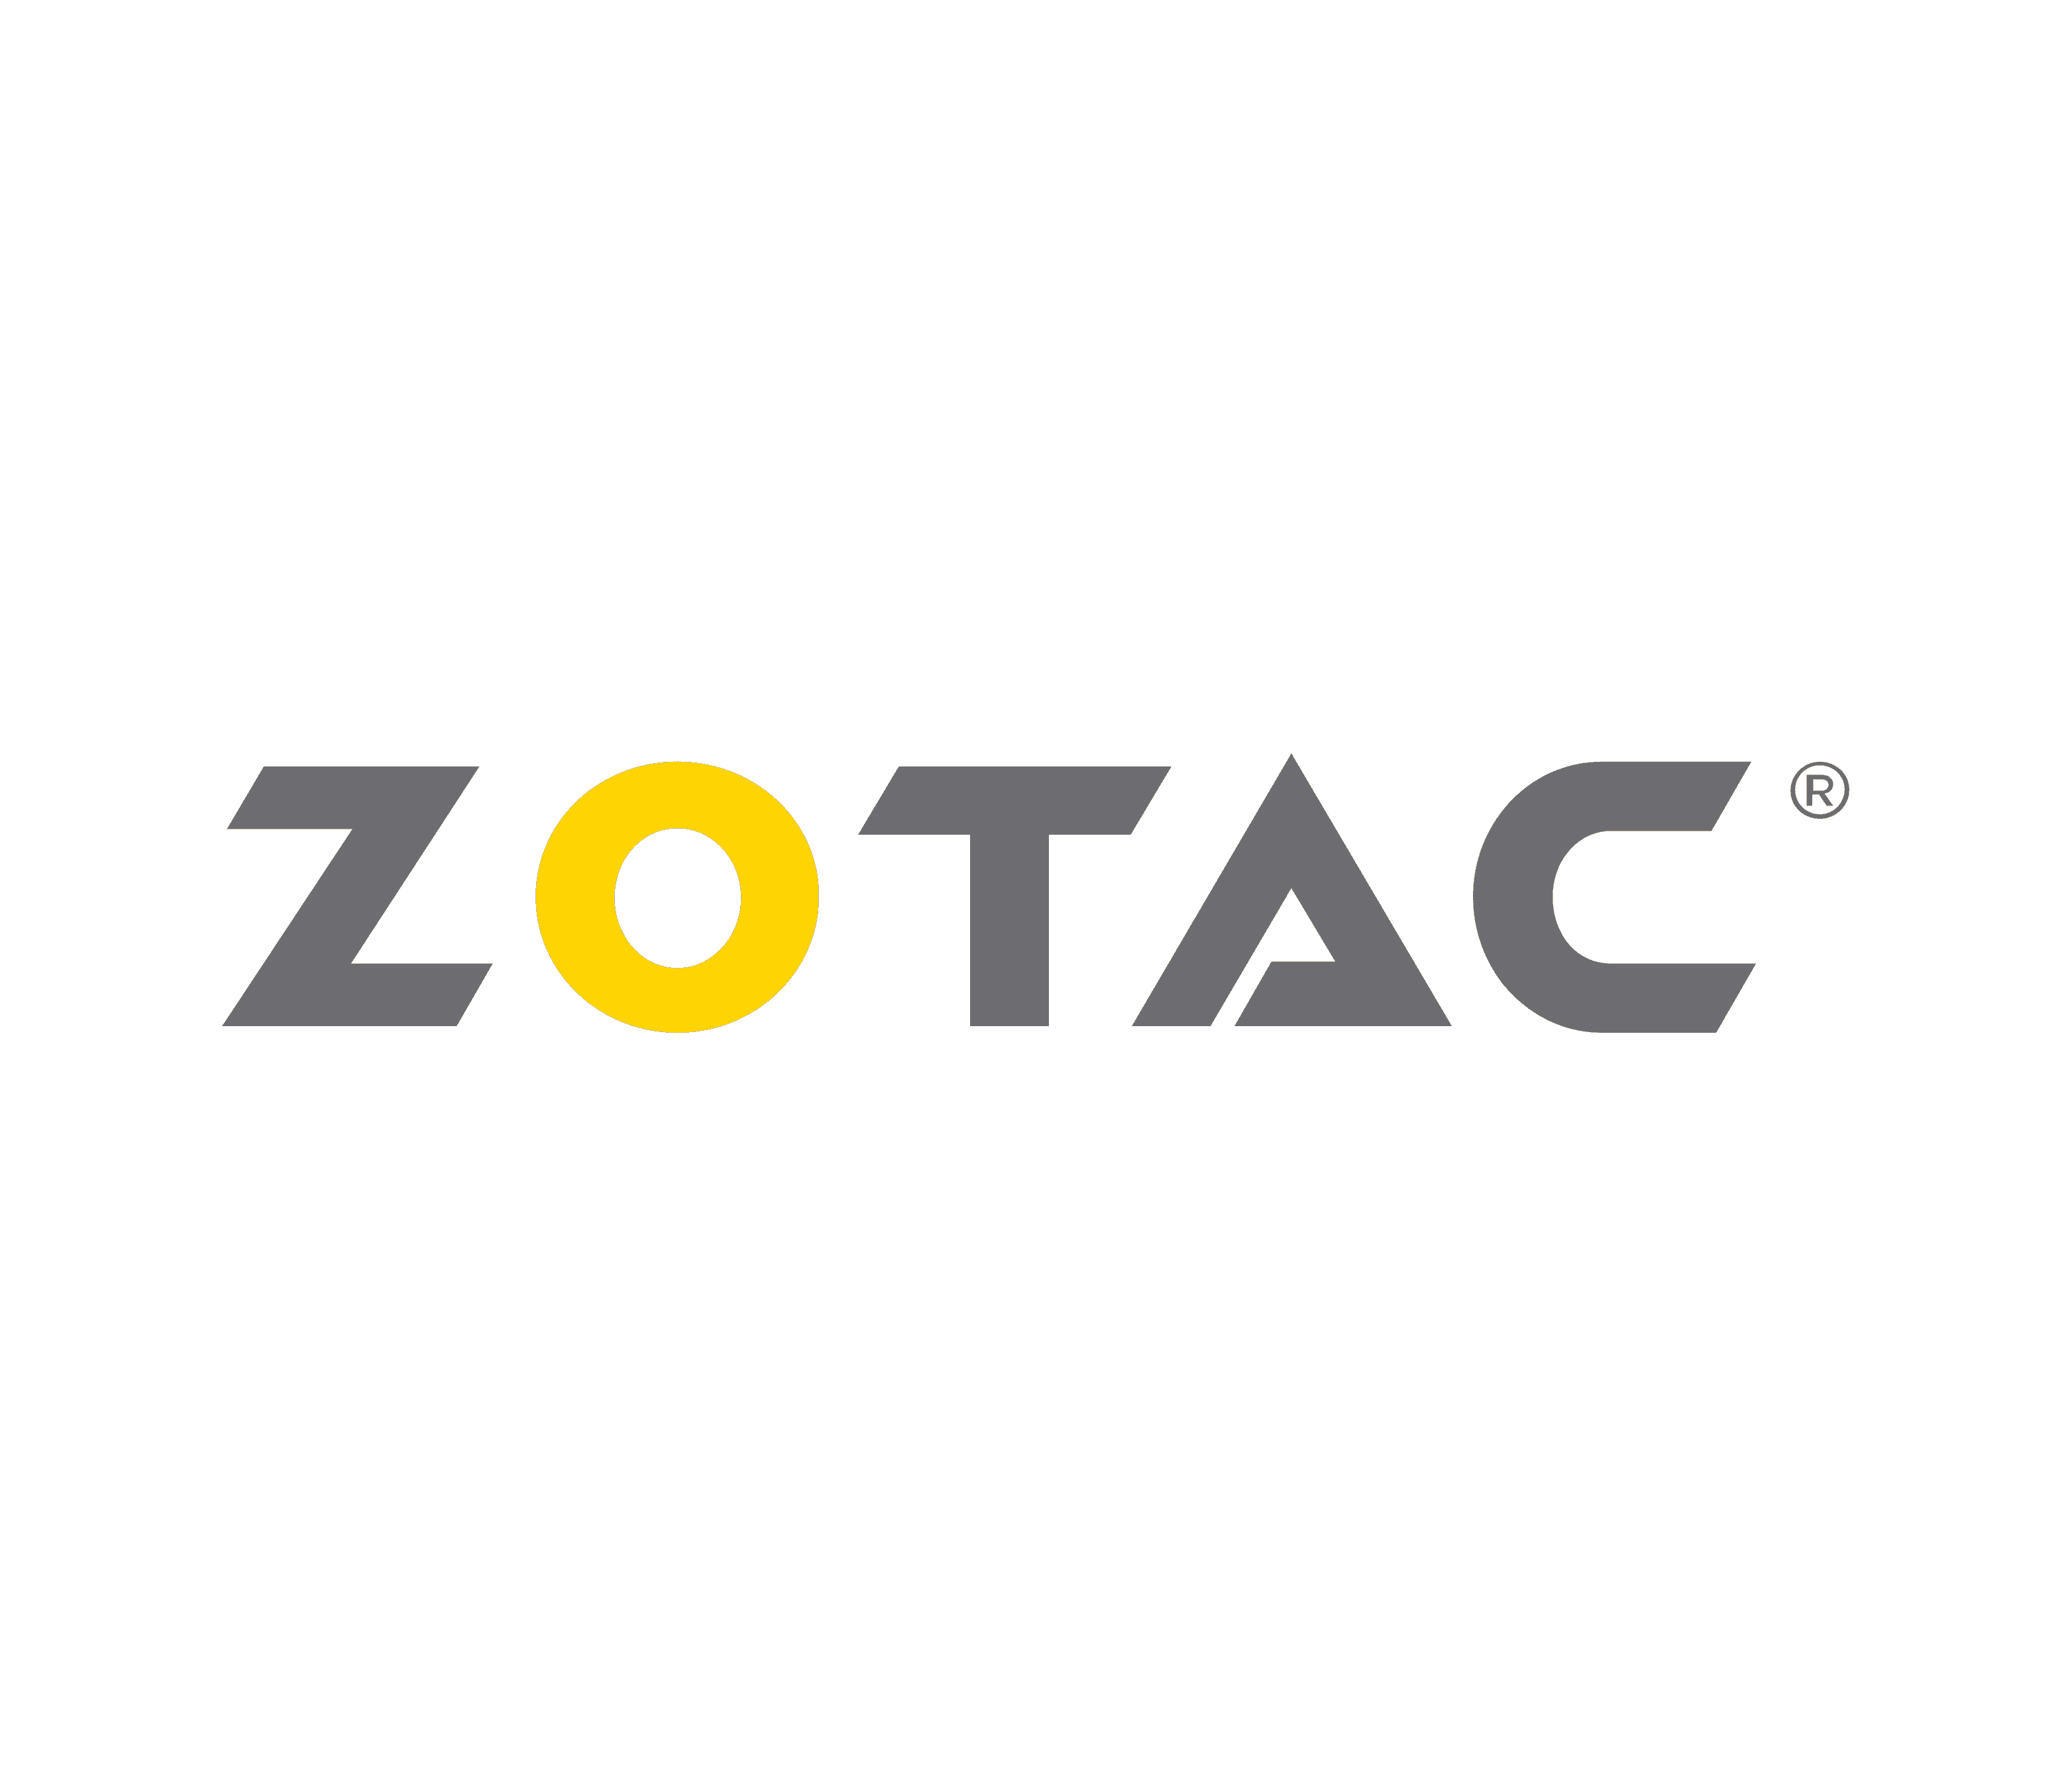 Marca destacada Zotac productos tarjetas gráficas placas base mini PCs